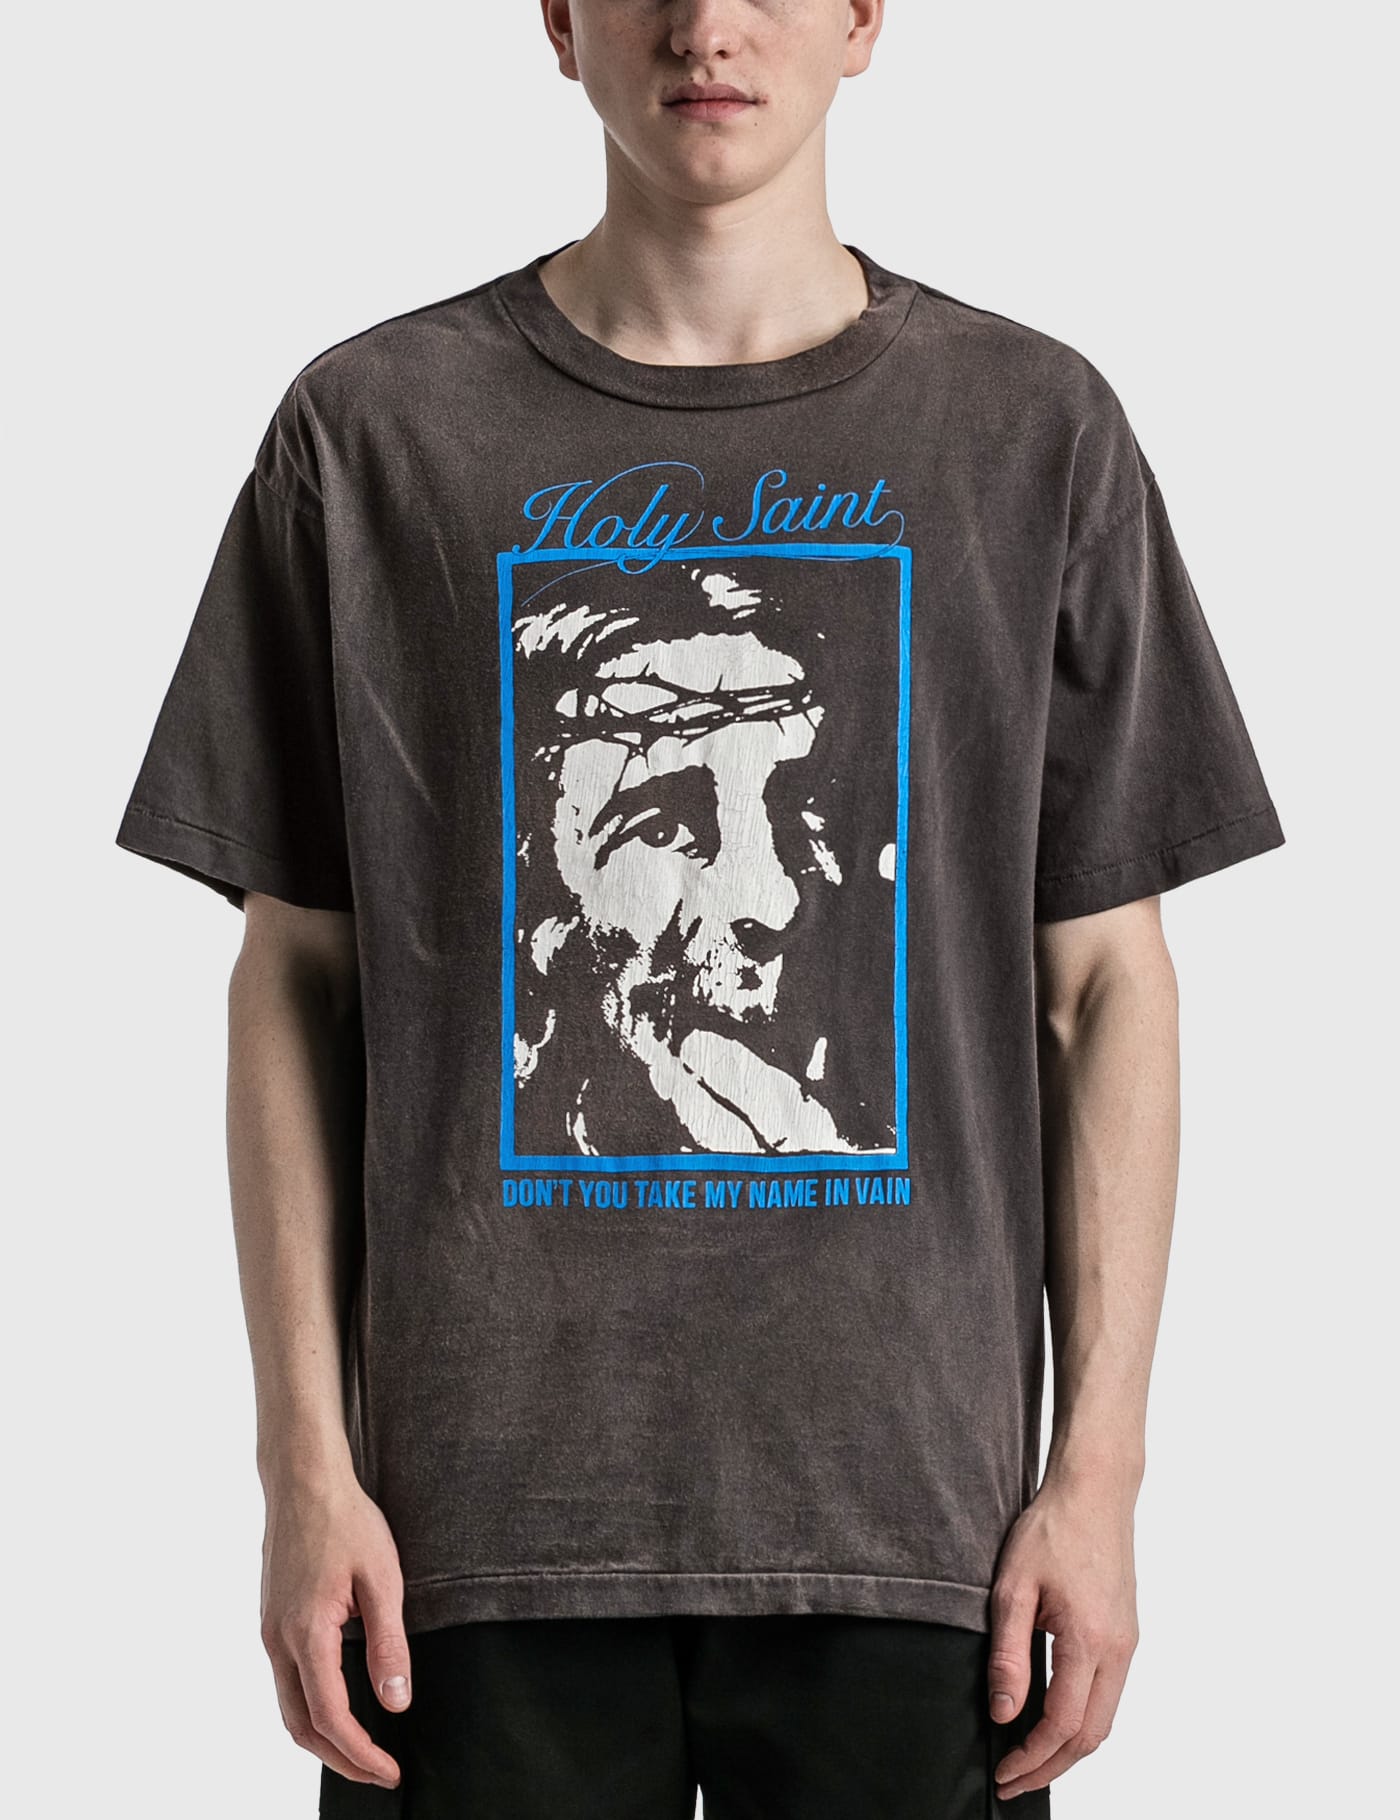 Saint Michael - Holy Saint T-shirt | HBX - Globally Curated